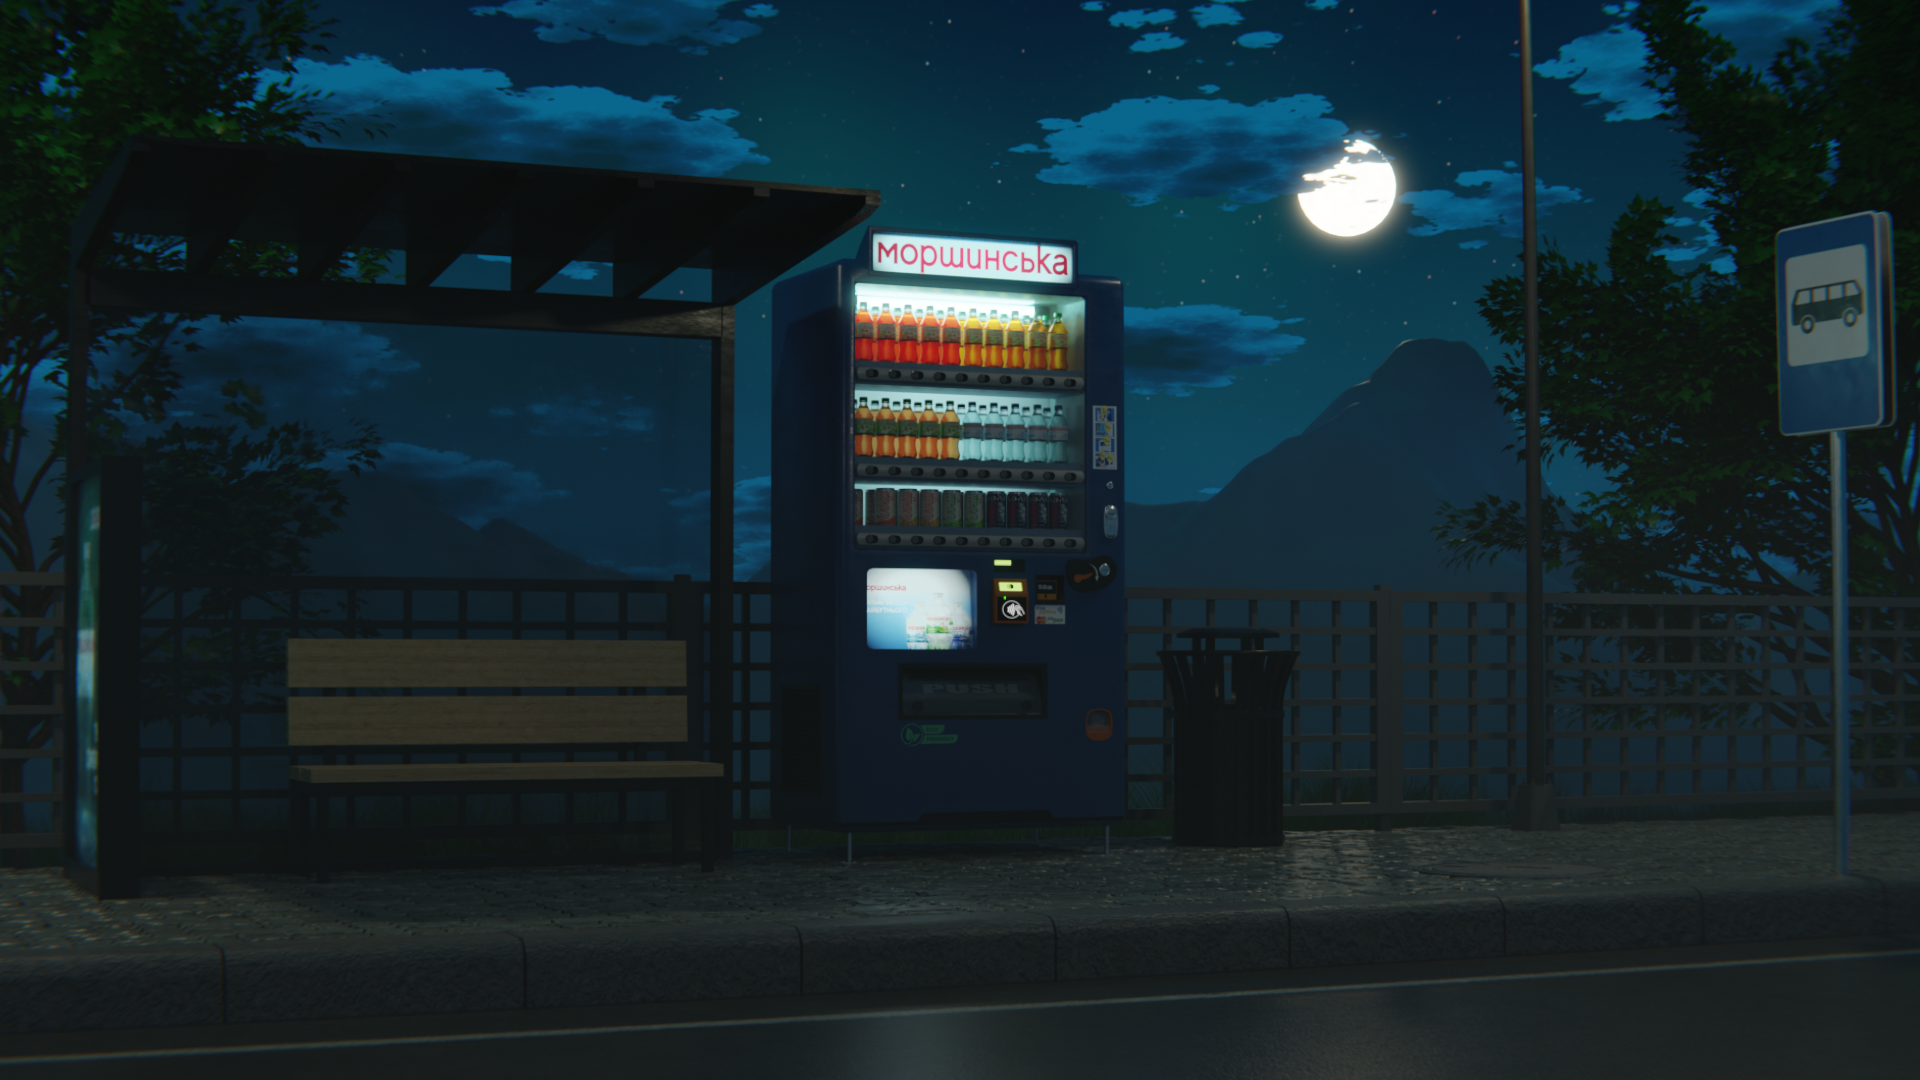 General 1920x1080 vending machine bus stop night Blender street soda digital art sky clouds Moon sign moonlight bench trash bin fence